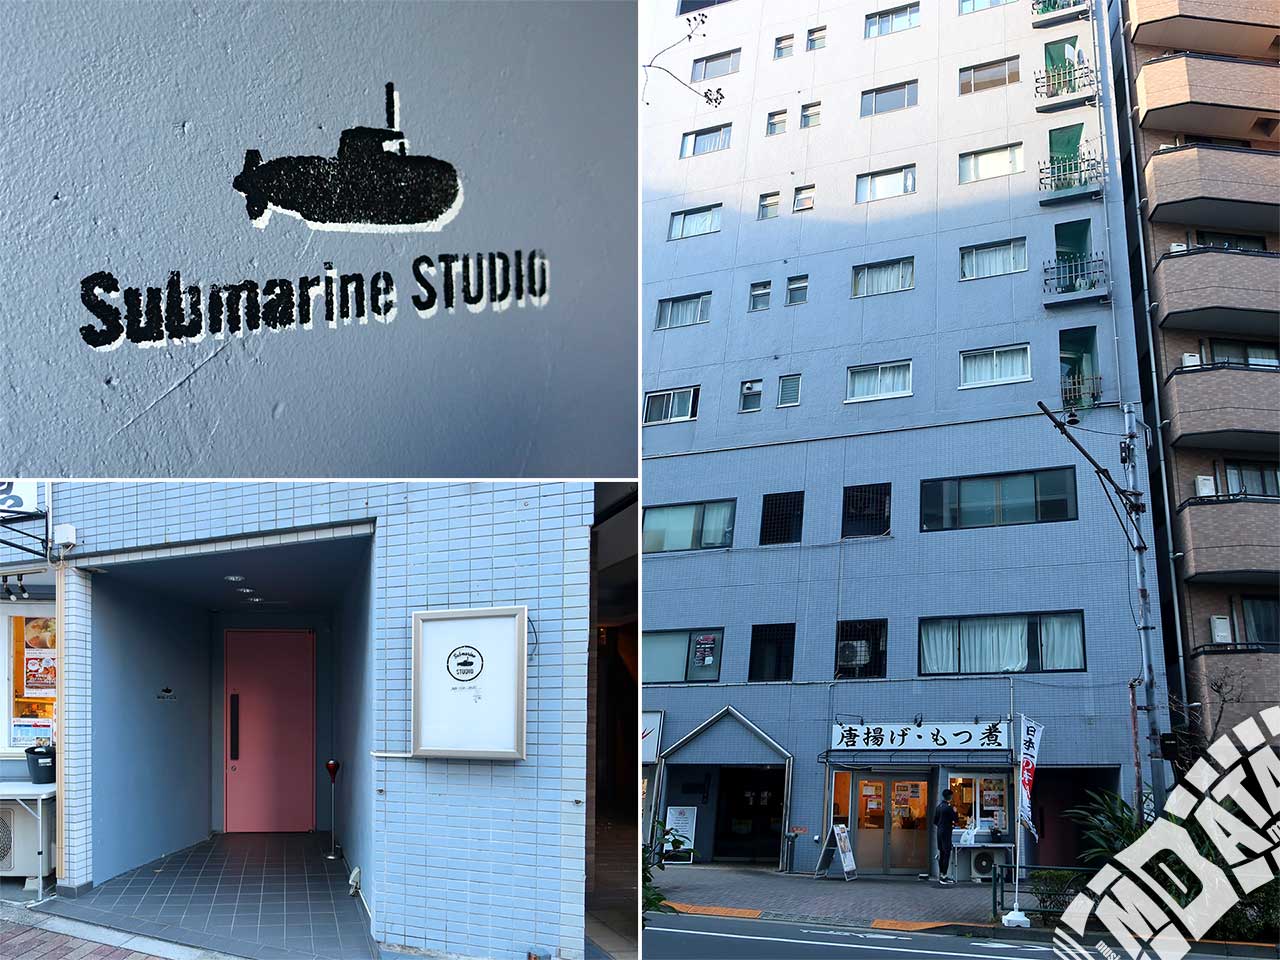 Submarine STUDIOの写真 撮影日:2018/12/25 Photo taken on 2018/12/25